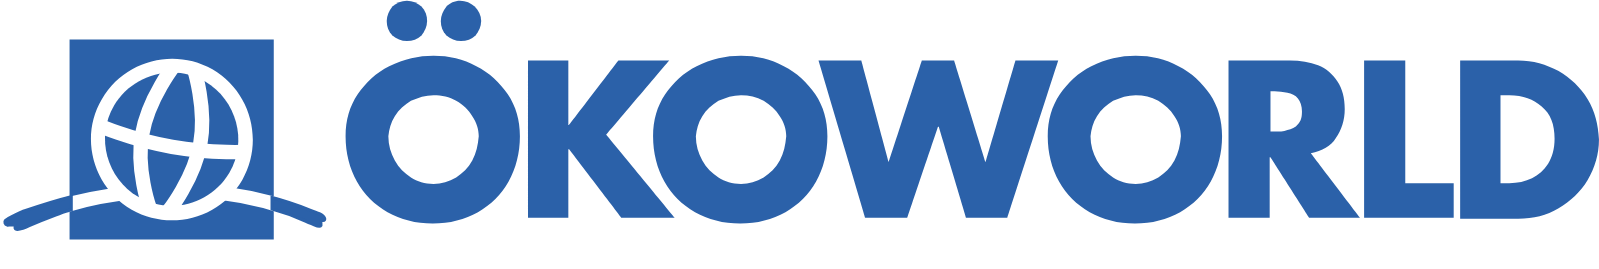 ÖKOWORLD logo large (transparent PNG)